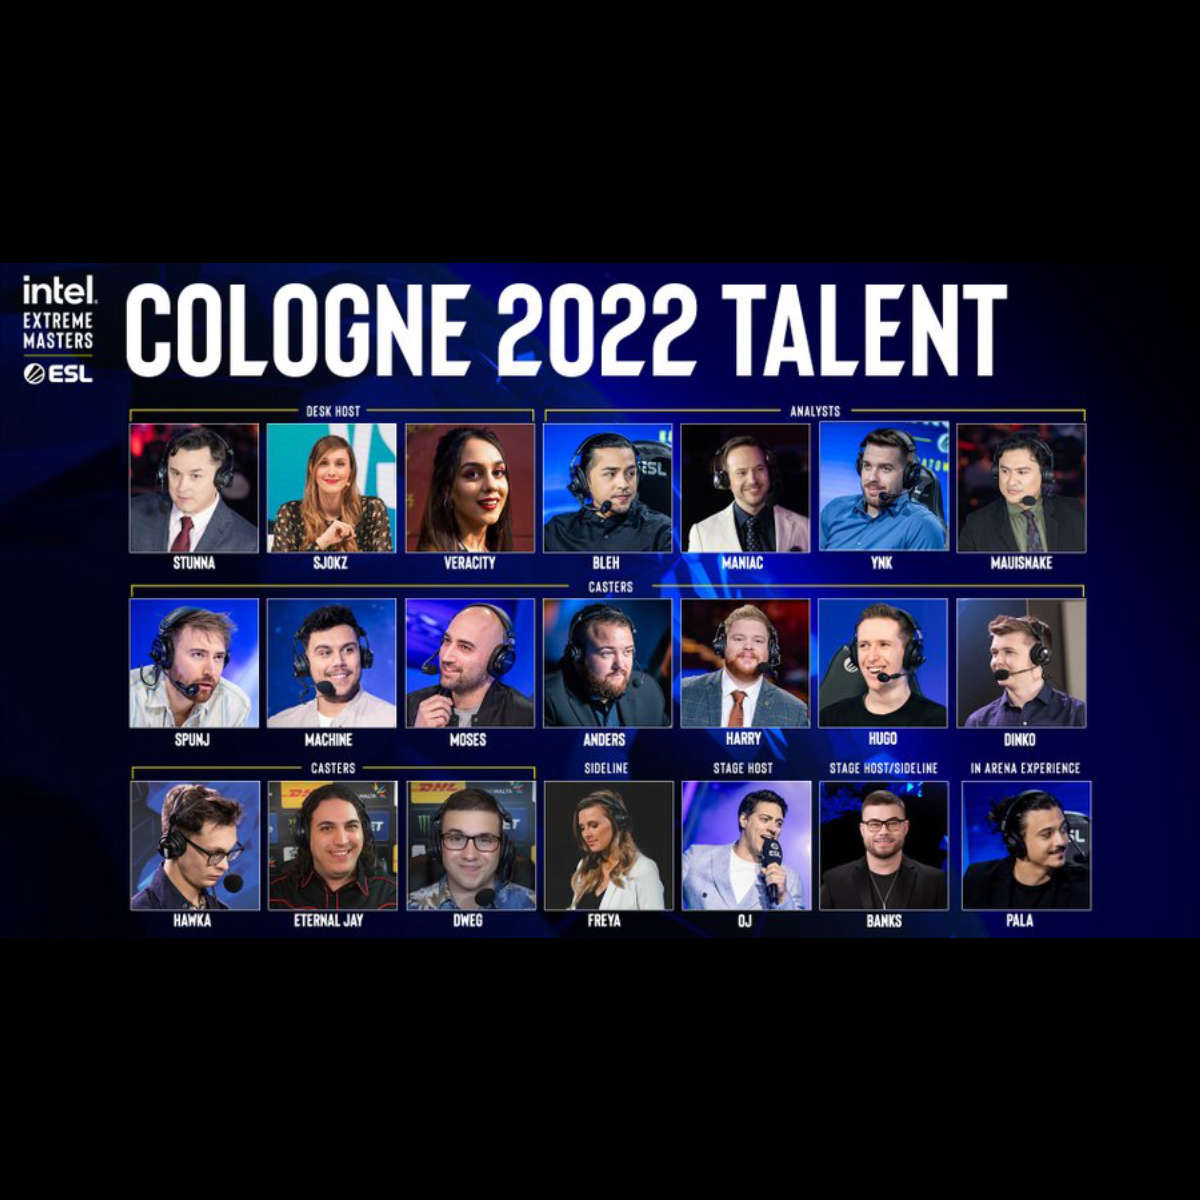 MOUZ and BIG unveil complete CS:GO rosters for IEM Cologne 2023